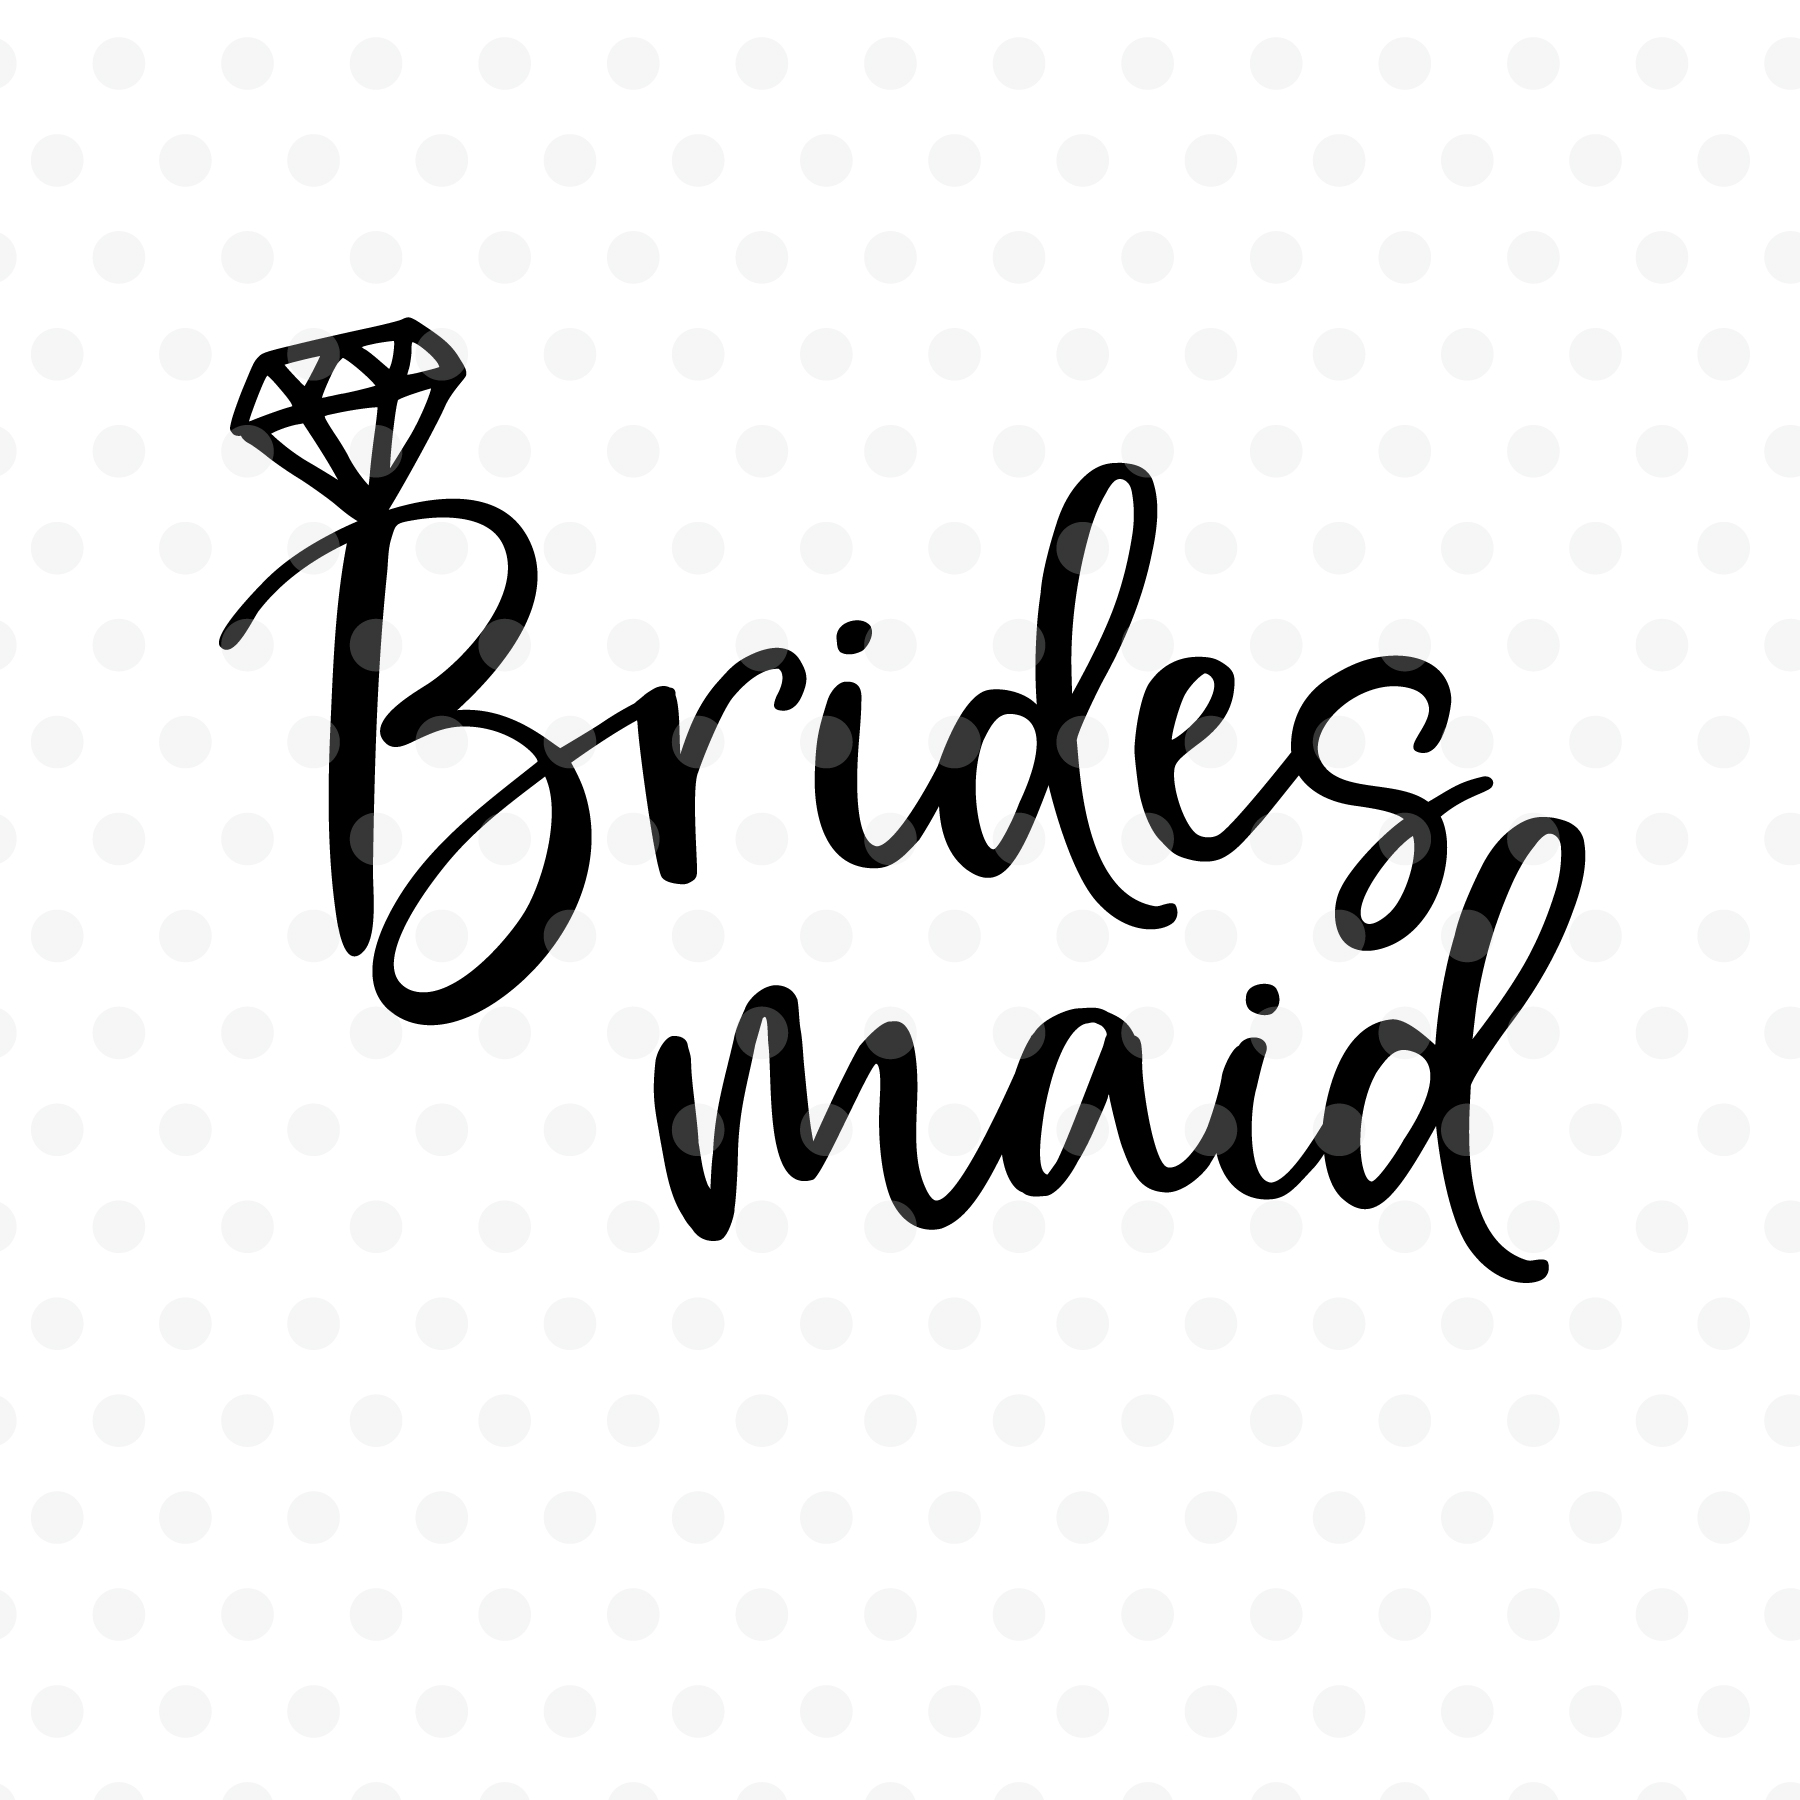 Bridesmaid wedding SVG, EPS, PNG, DXF